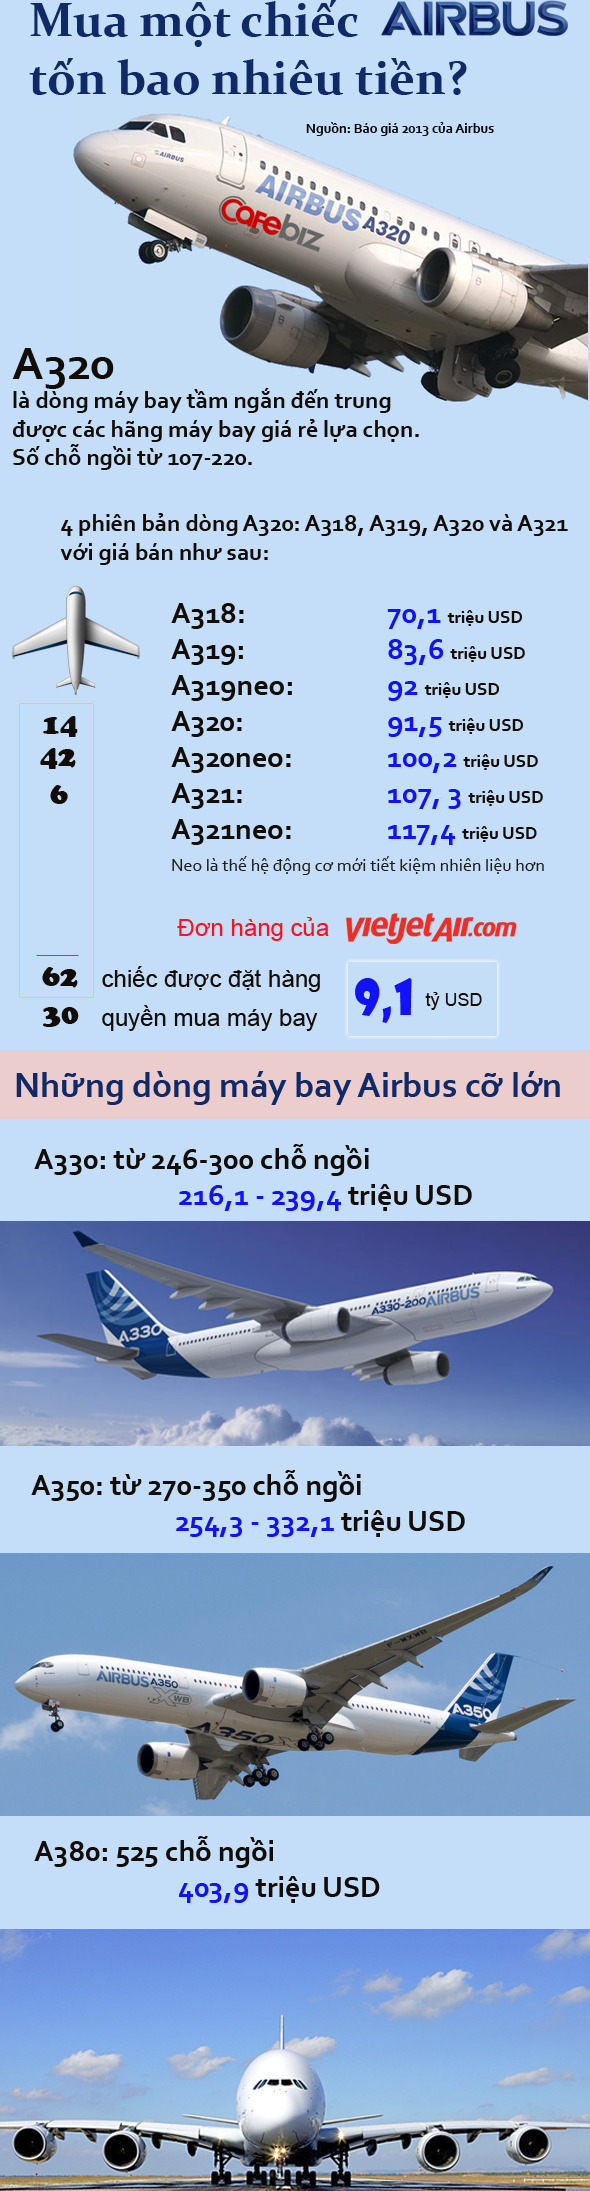 Bao tiền một 'con' Airbus? (1)